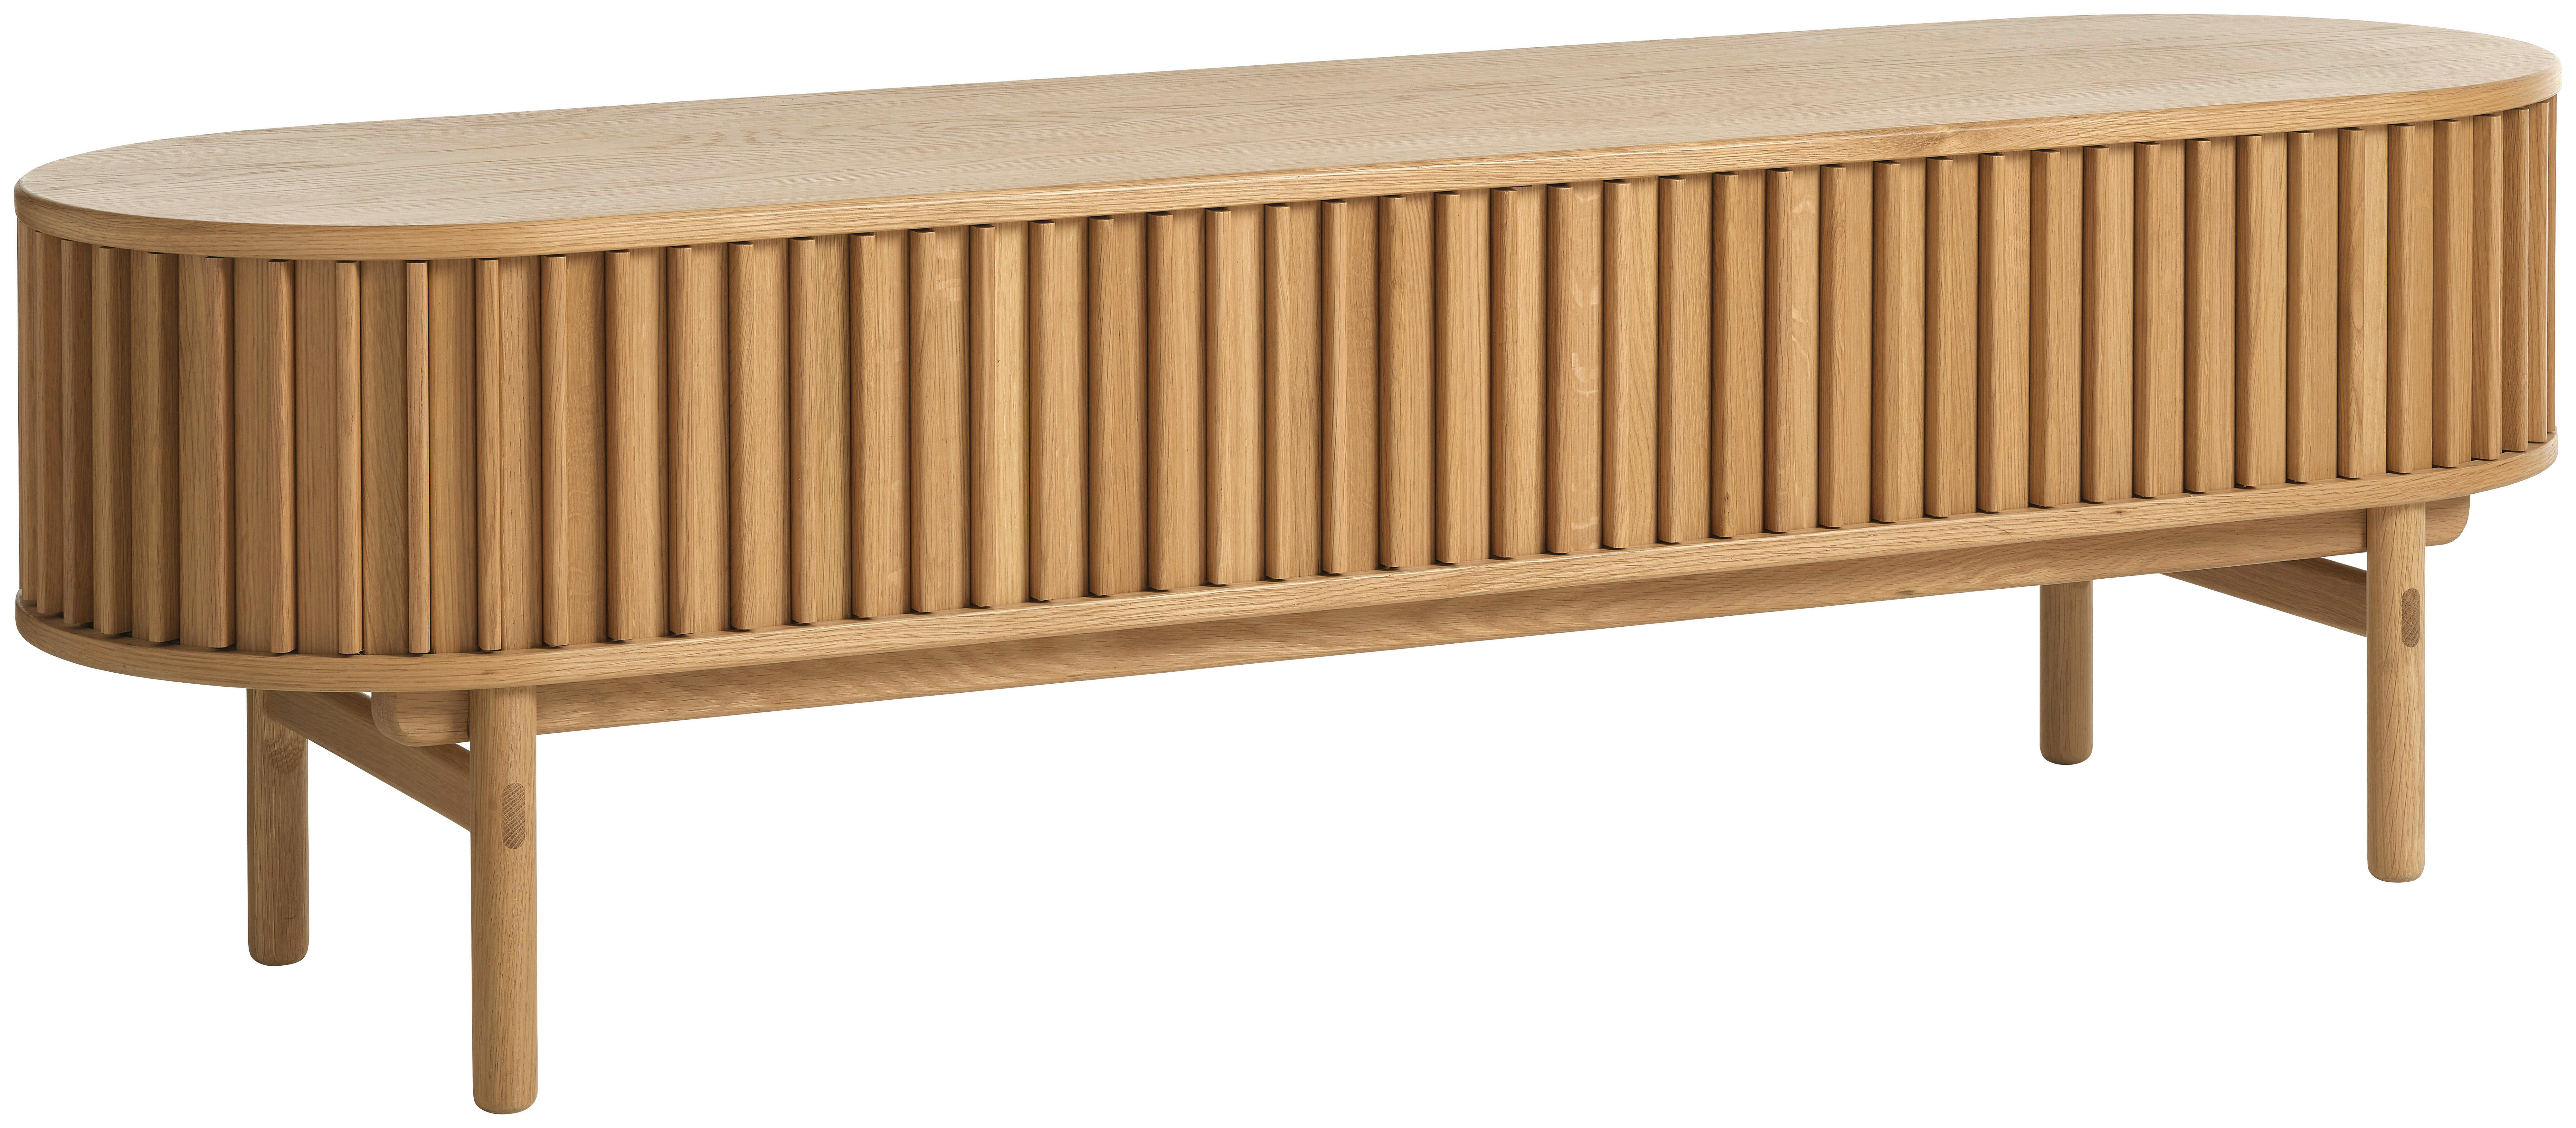 LOWBOARD furniert, massiv Eichefarben  - Eichefarben, Design, Holz (160/48/45cm) - Lomoco